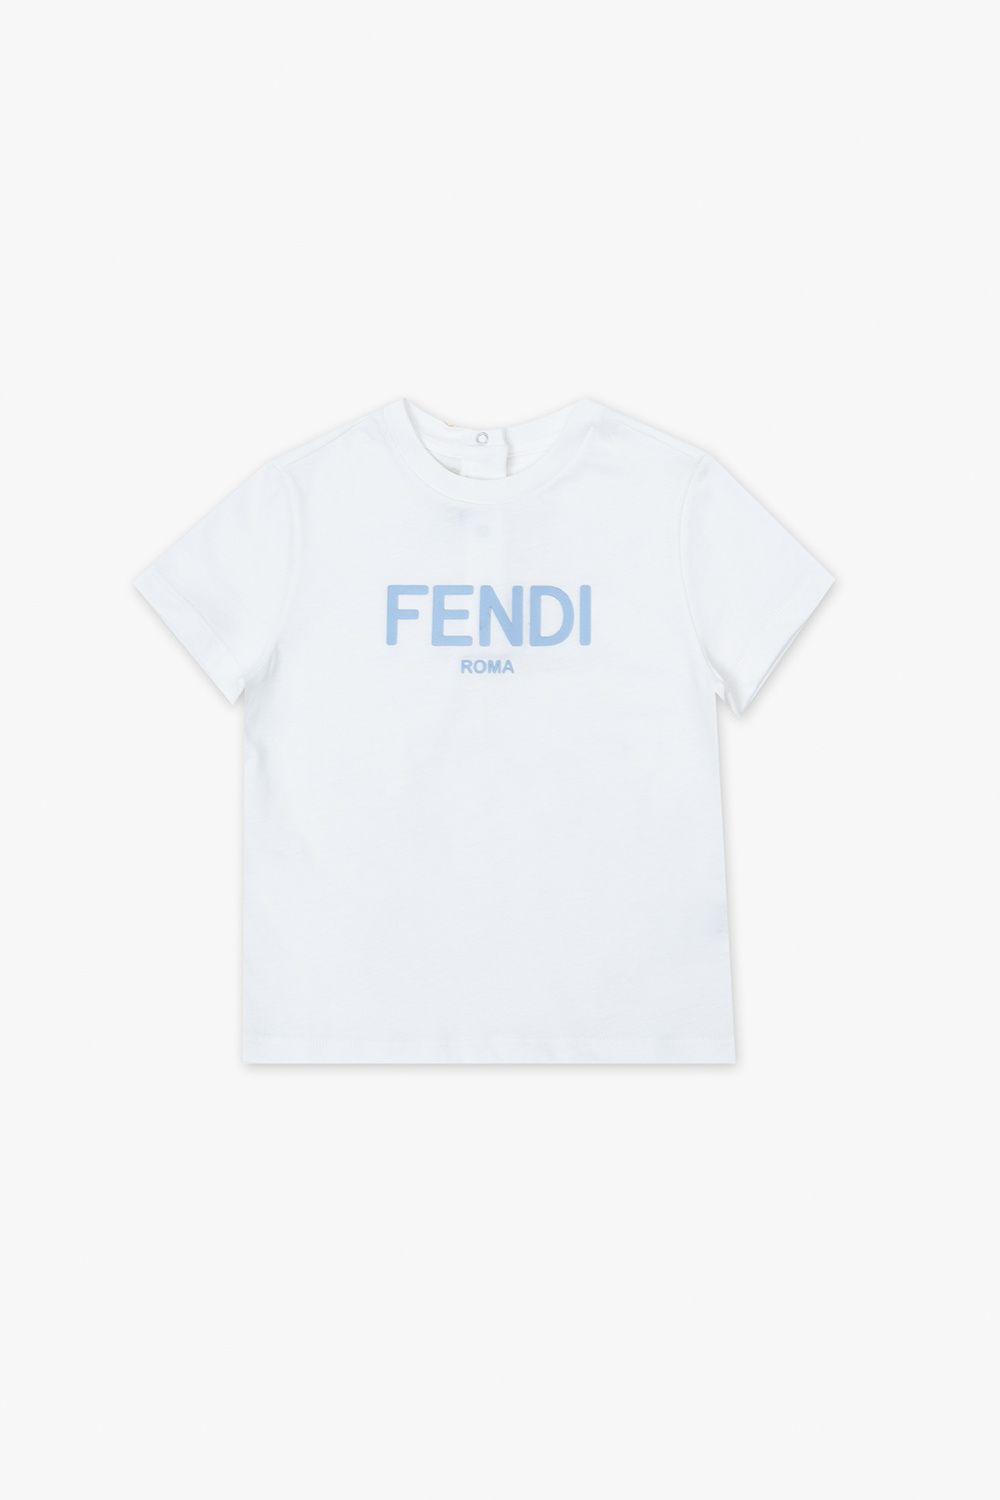 Fendi Kids fendi kids bag print t shirt item